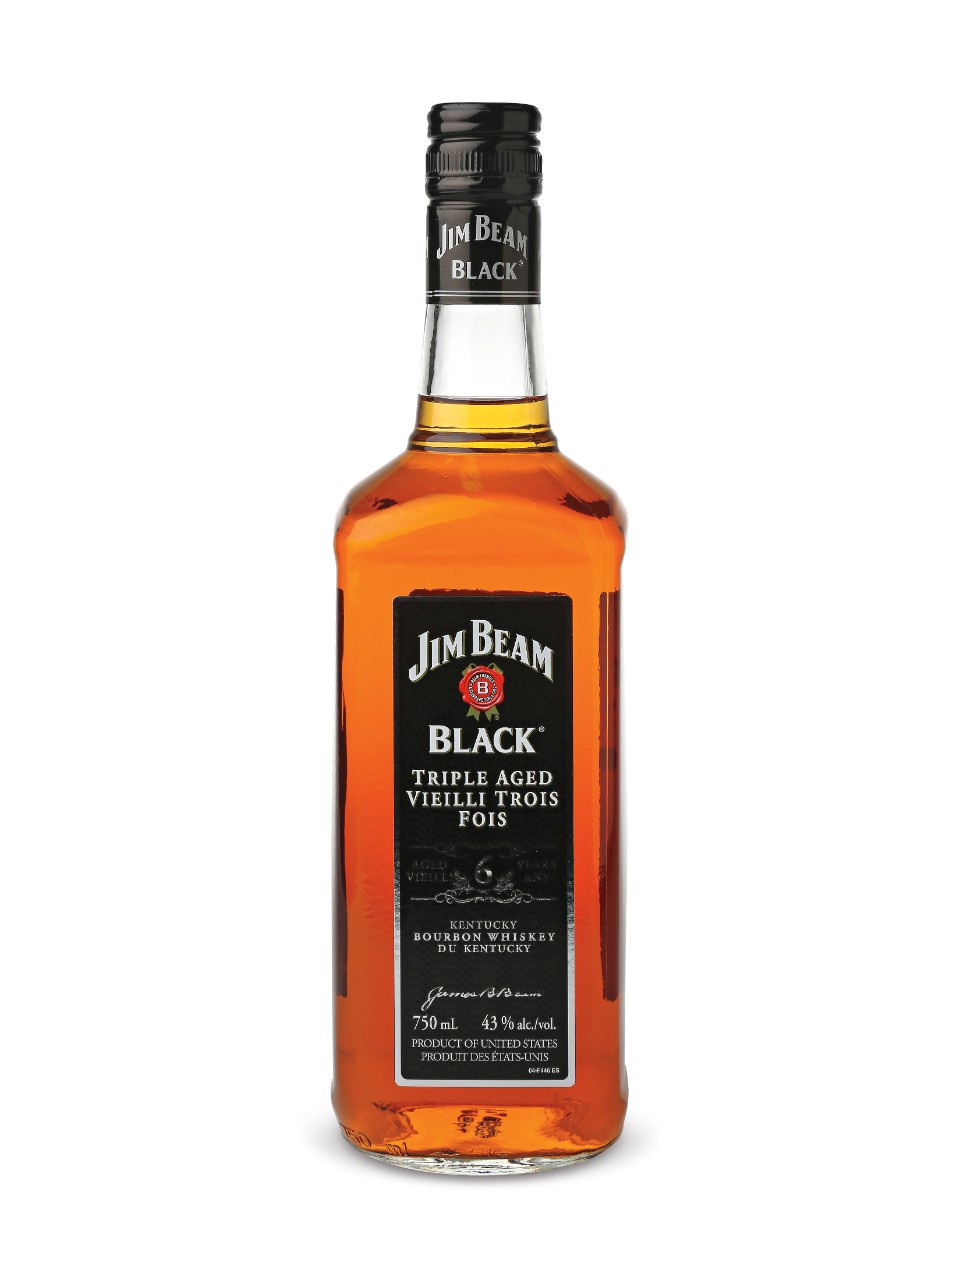 Jim Beam Black Kentucky Bourbon Aged 6 Years